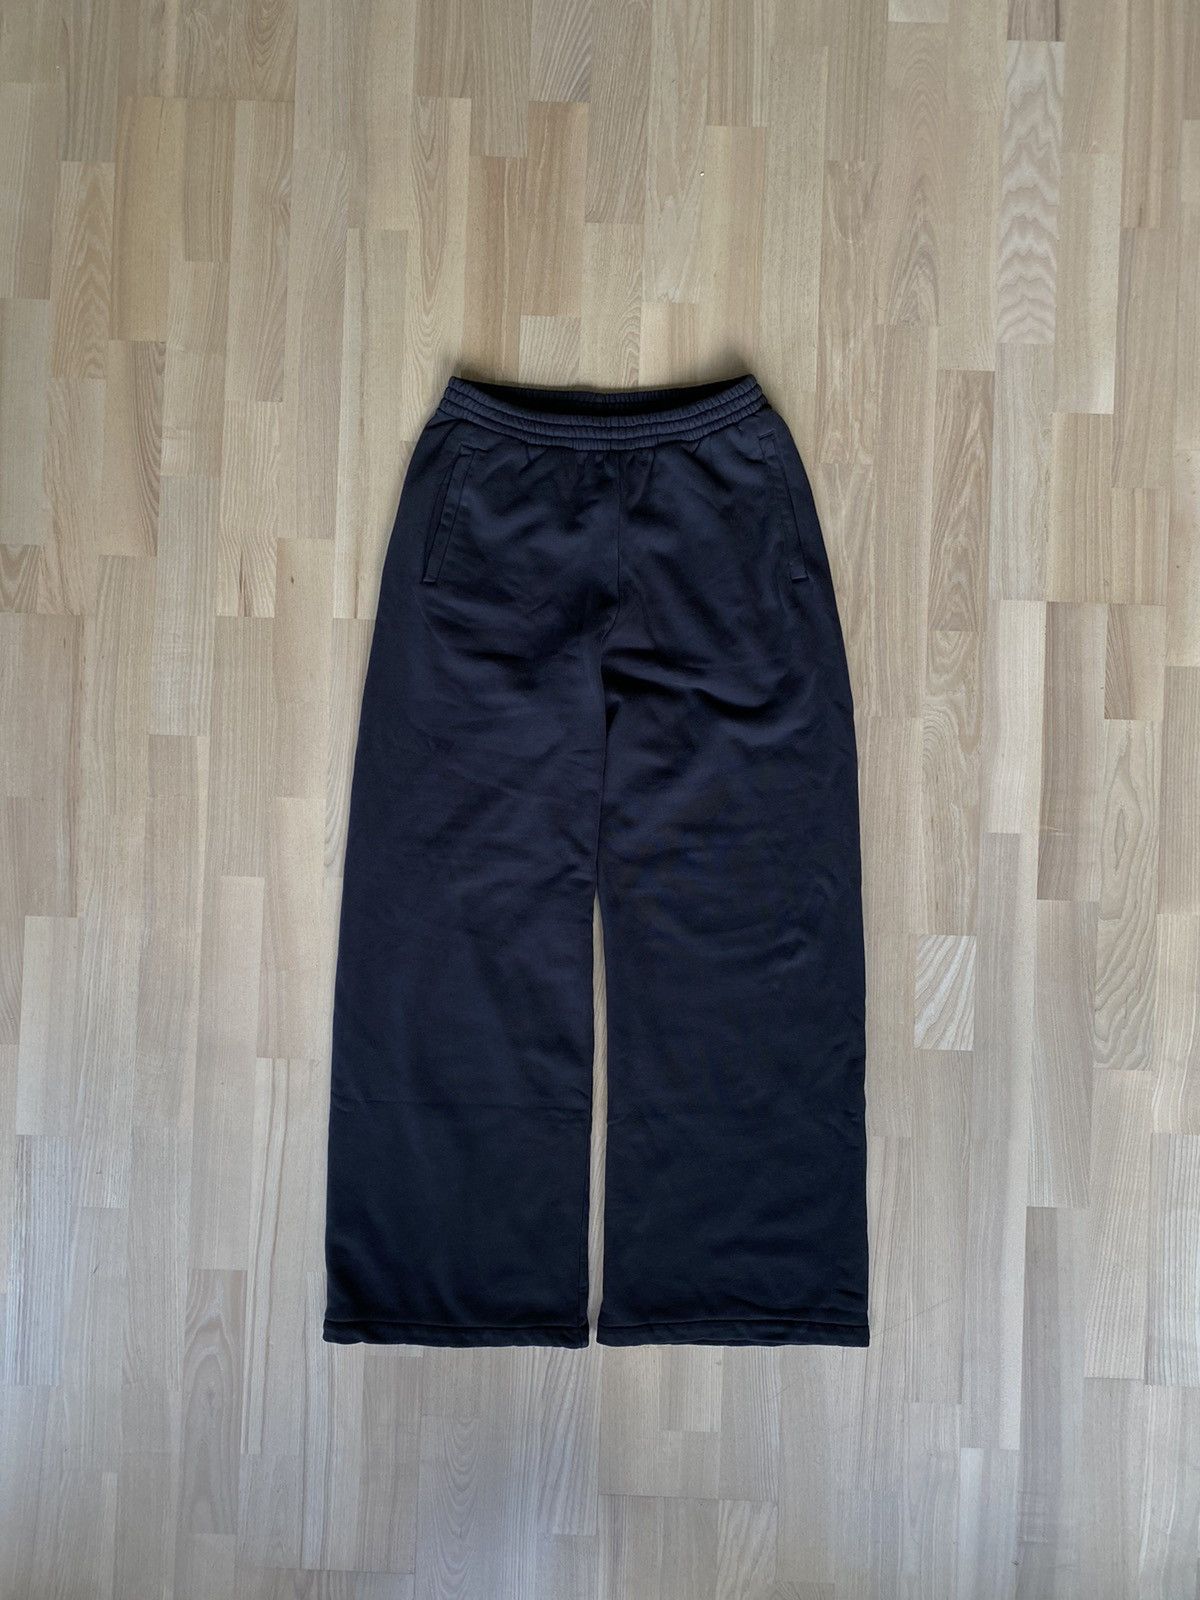 Balenciaga Yeezy Gap Sweatpants Black | Grailed